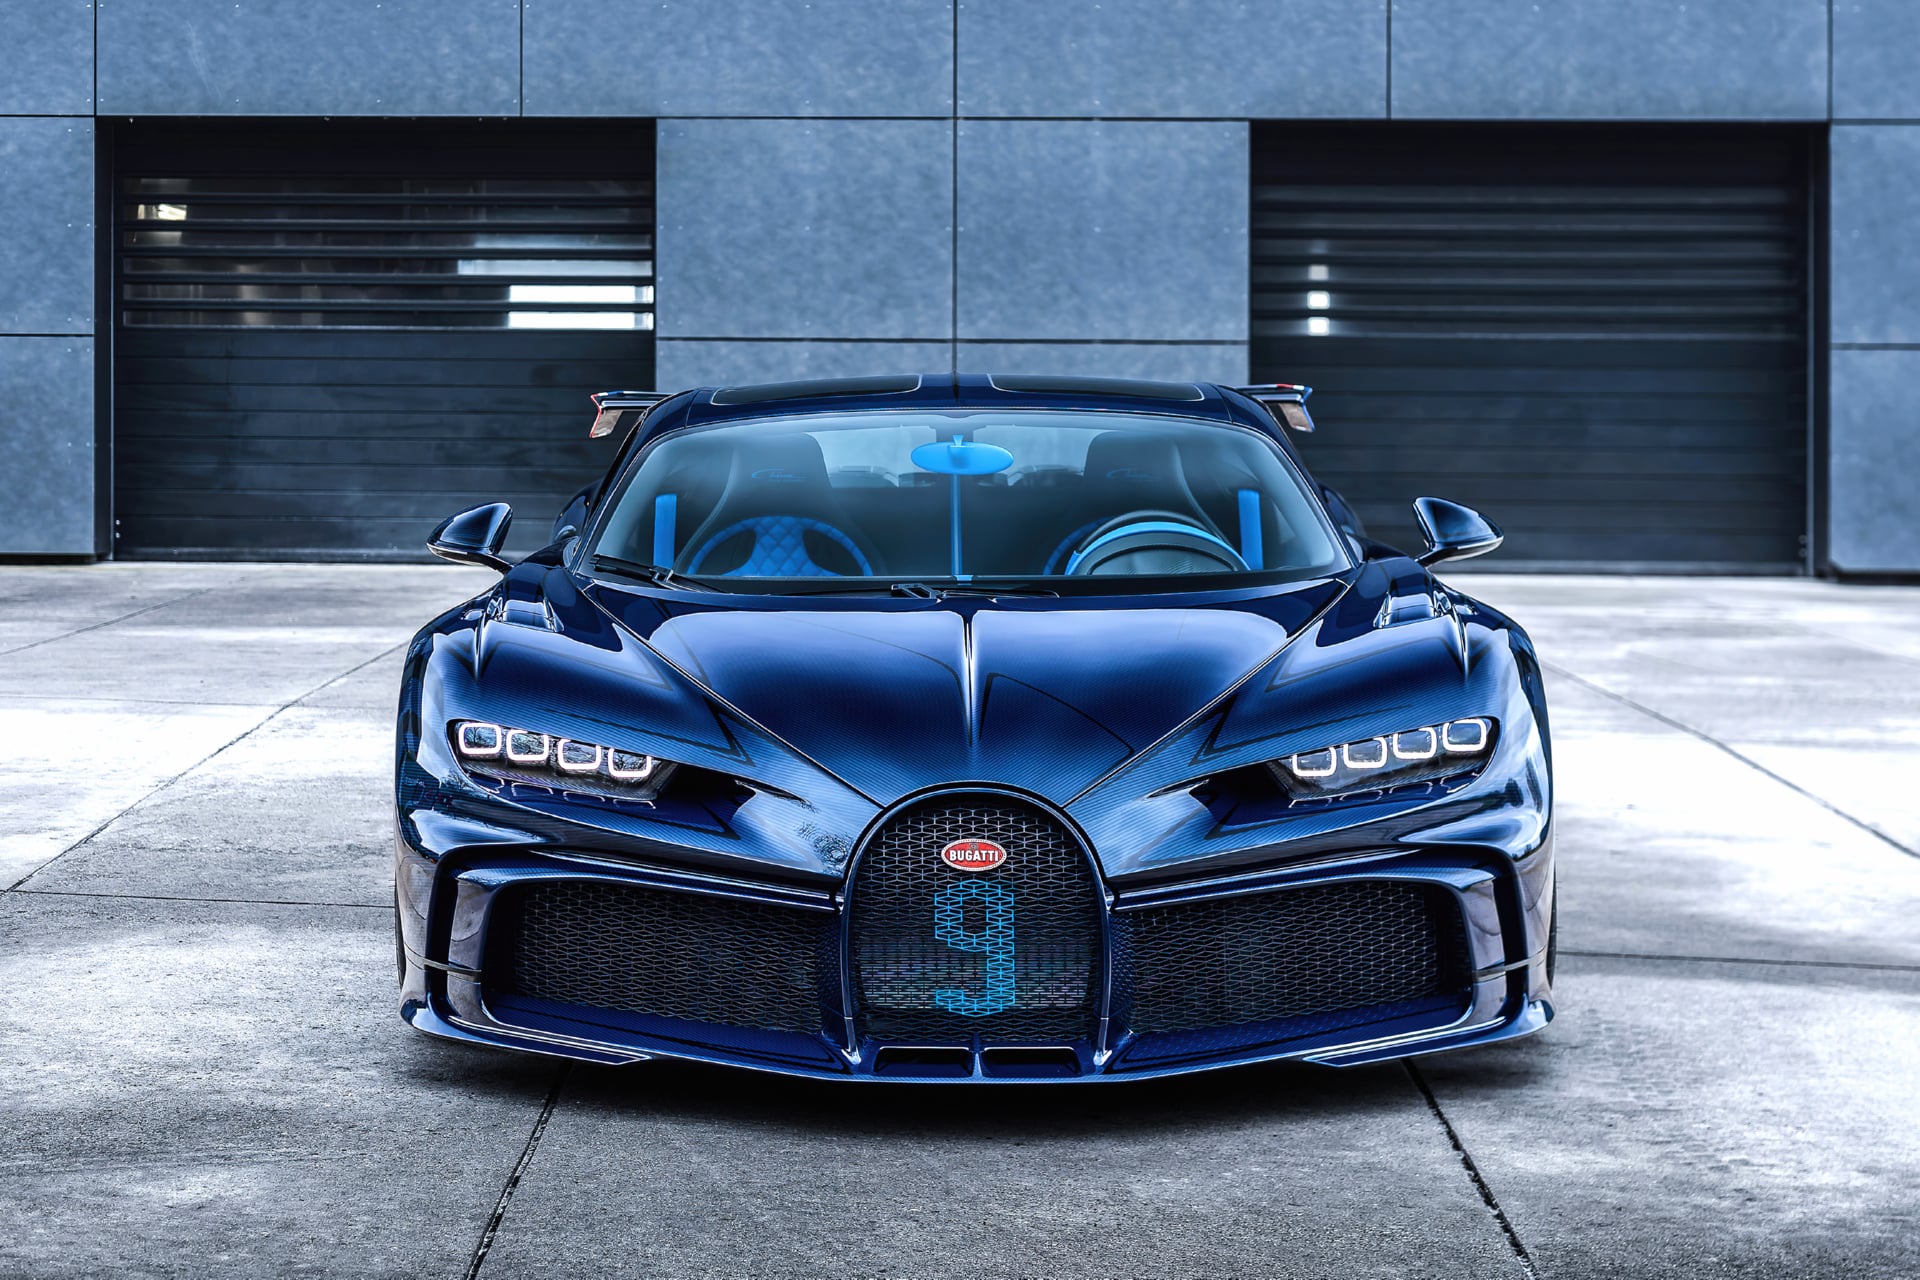 Bugatti Chiron Pur Sport Vague de Lumiè at 320 x 480 iPhone size wallpapers HD quality